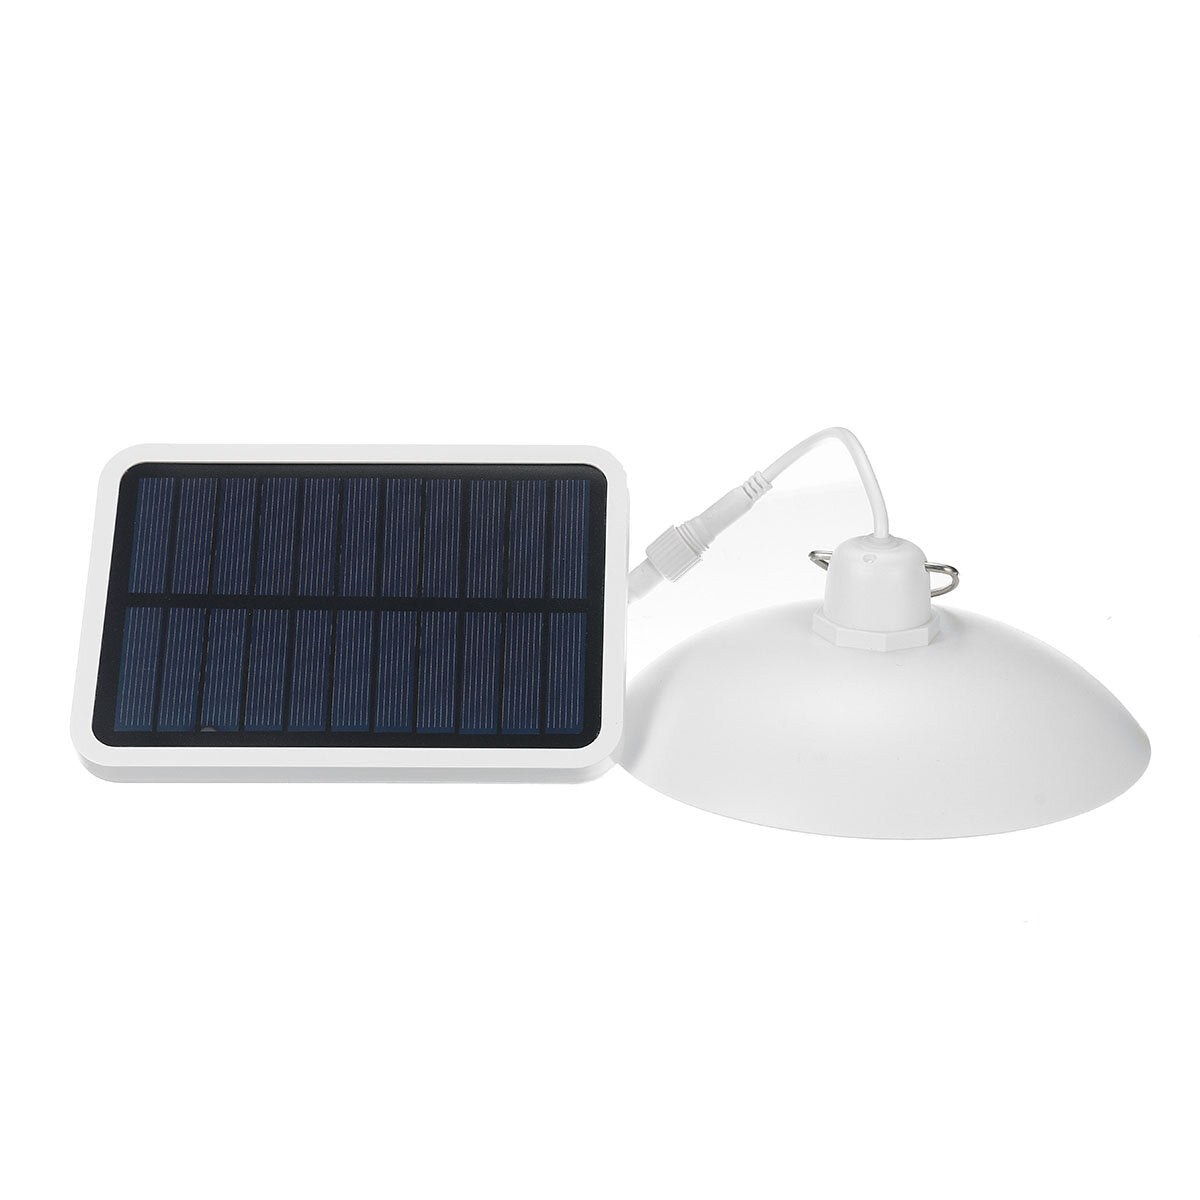 260 Lumen Solar Pendant Light Outdoor Indoor Solar Lamp With Line Warm White/White Lighting For Camping Garden Yard